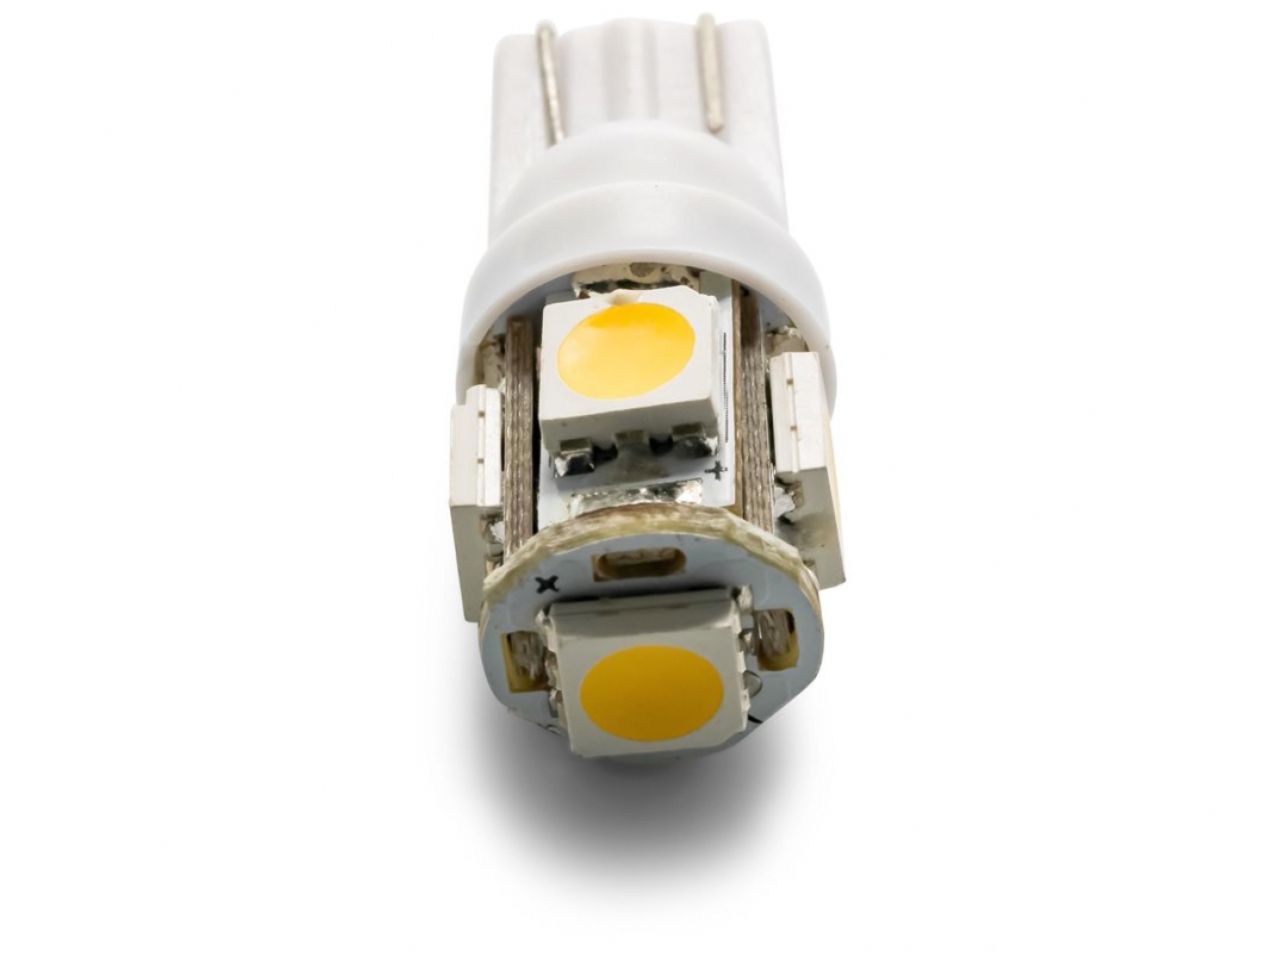 Camco LED - 194 / 906 - (T10 Wedge) 5-LED 60lm, BrightWhite (1PK)